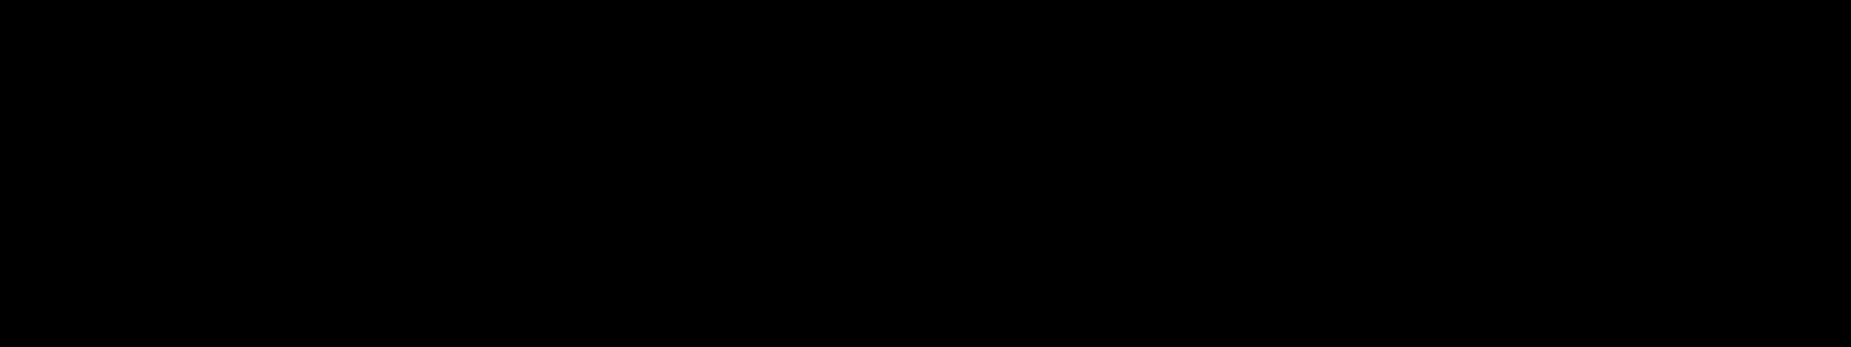 Discord Logo Black Background PNG